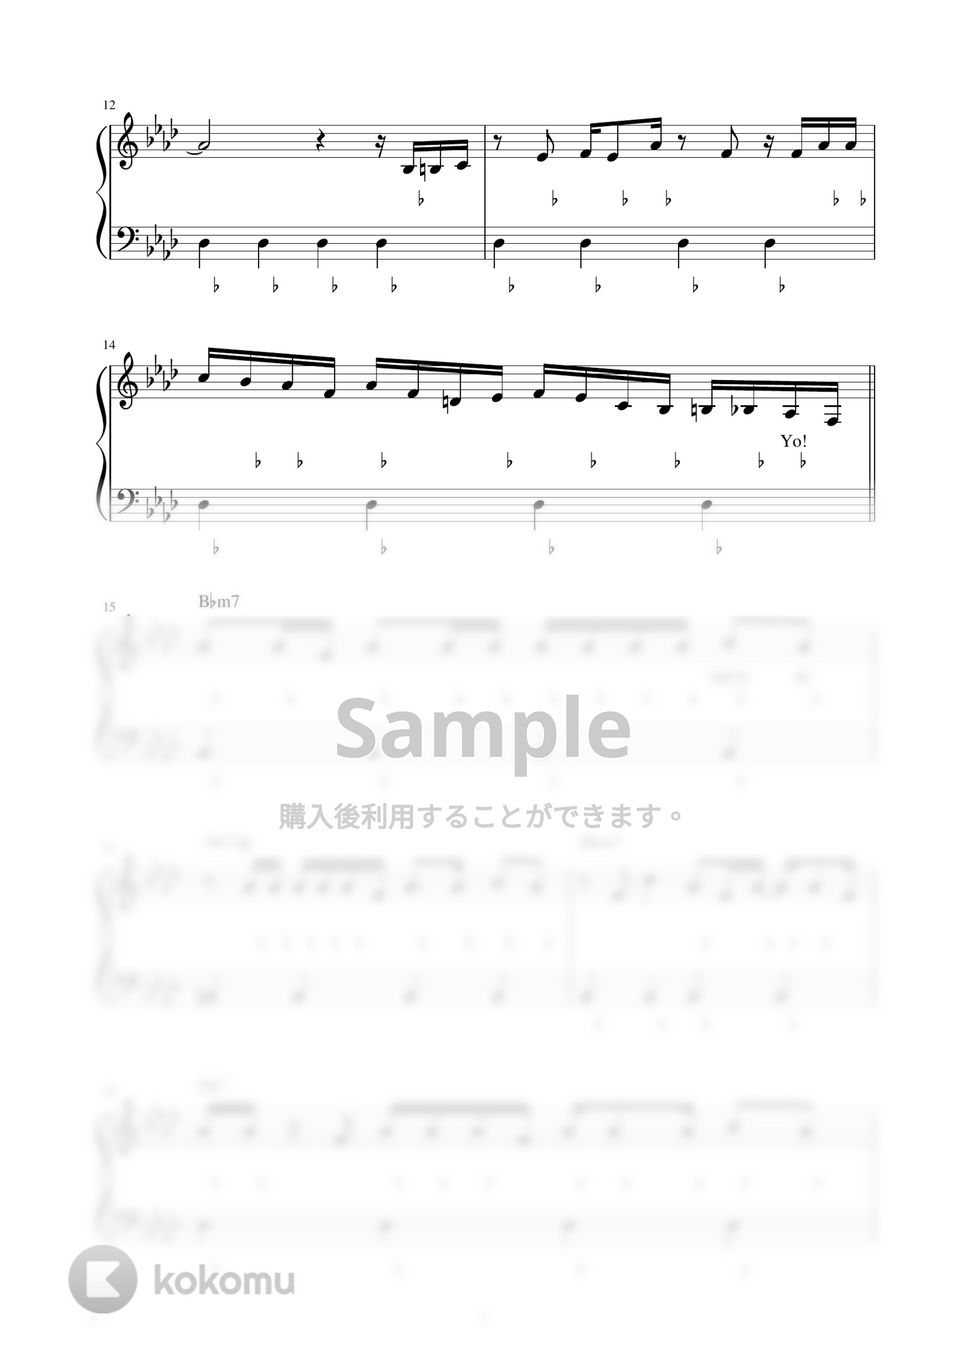 EIKO starring 96猫 - 気分上々↑↑ (ピアノ楽譜 / かんたん両手 / 歌詞付き / ドレミ付き / 初心者向き) by piano.tokyo